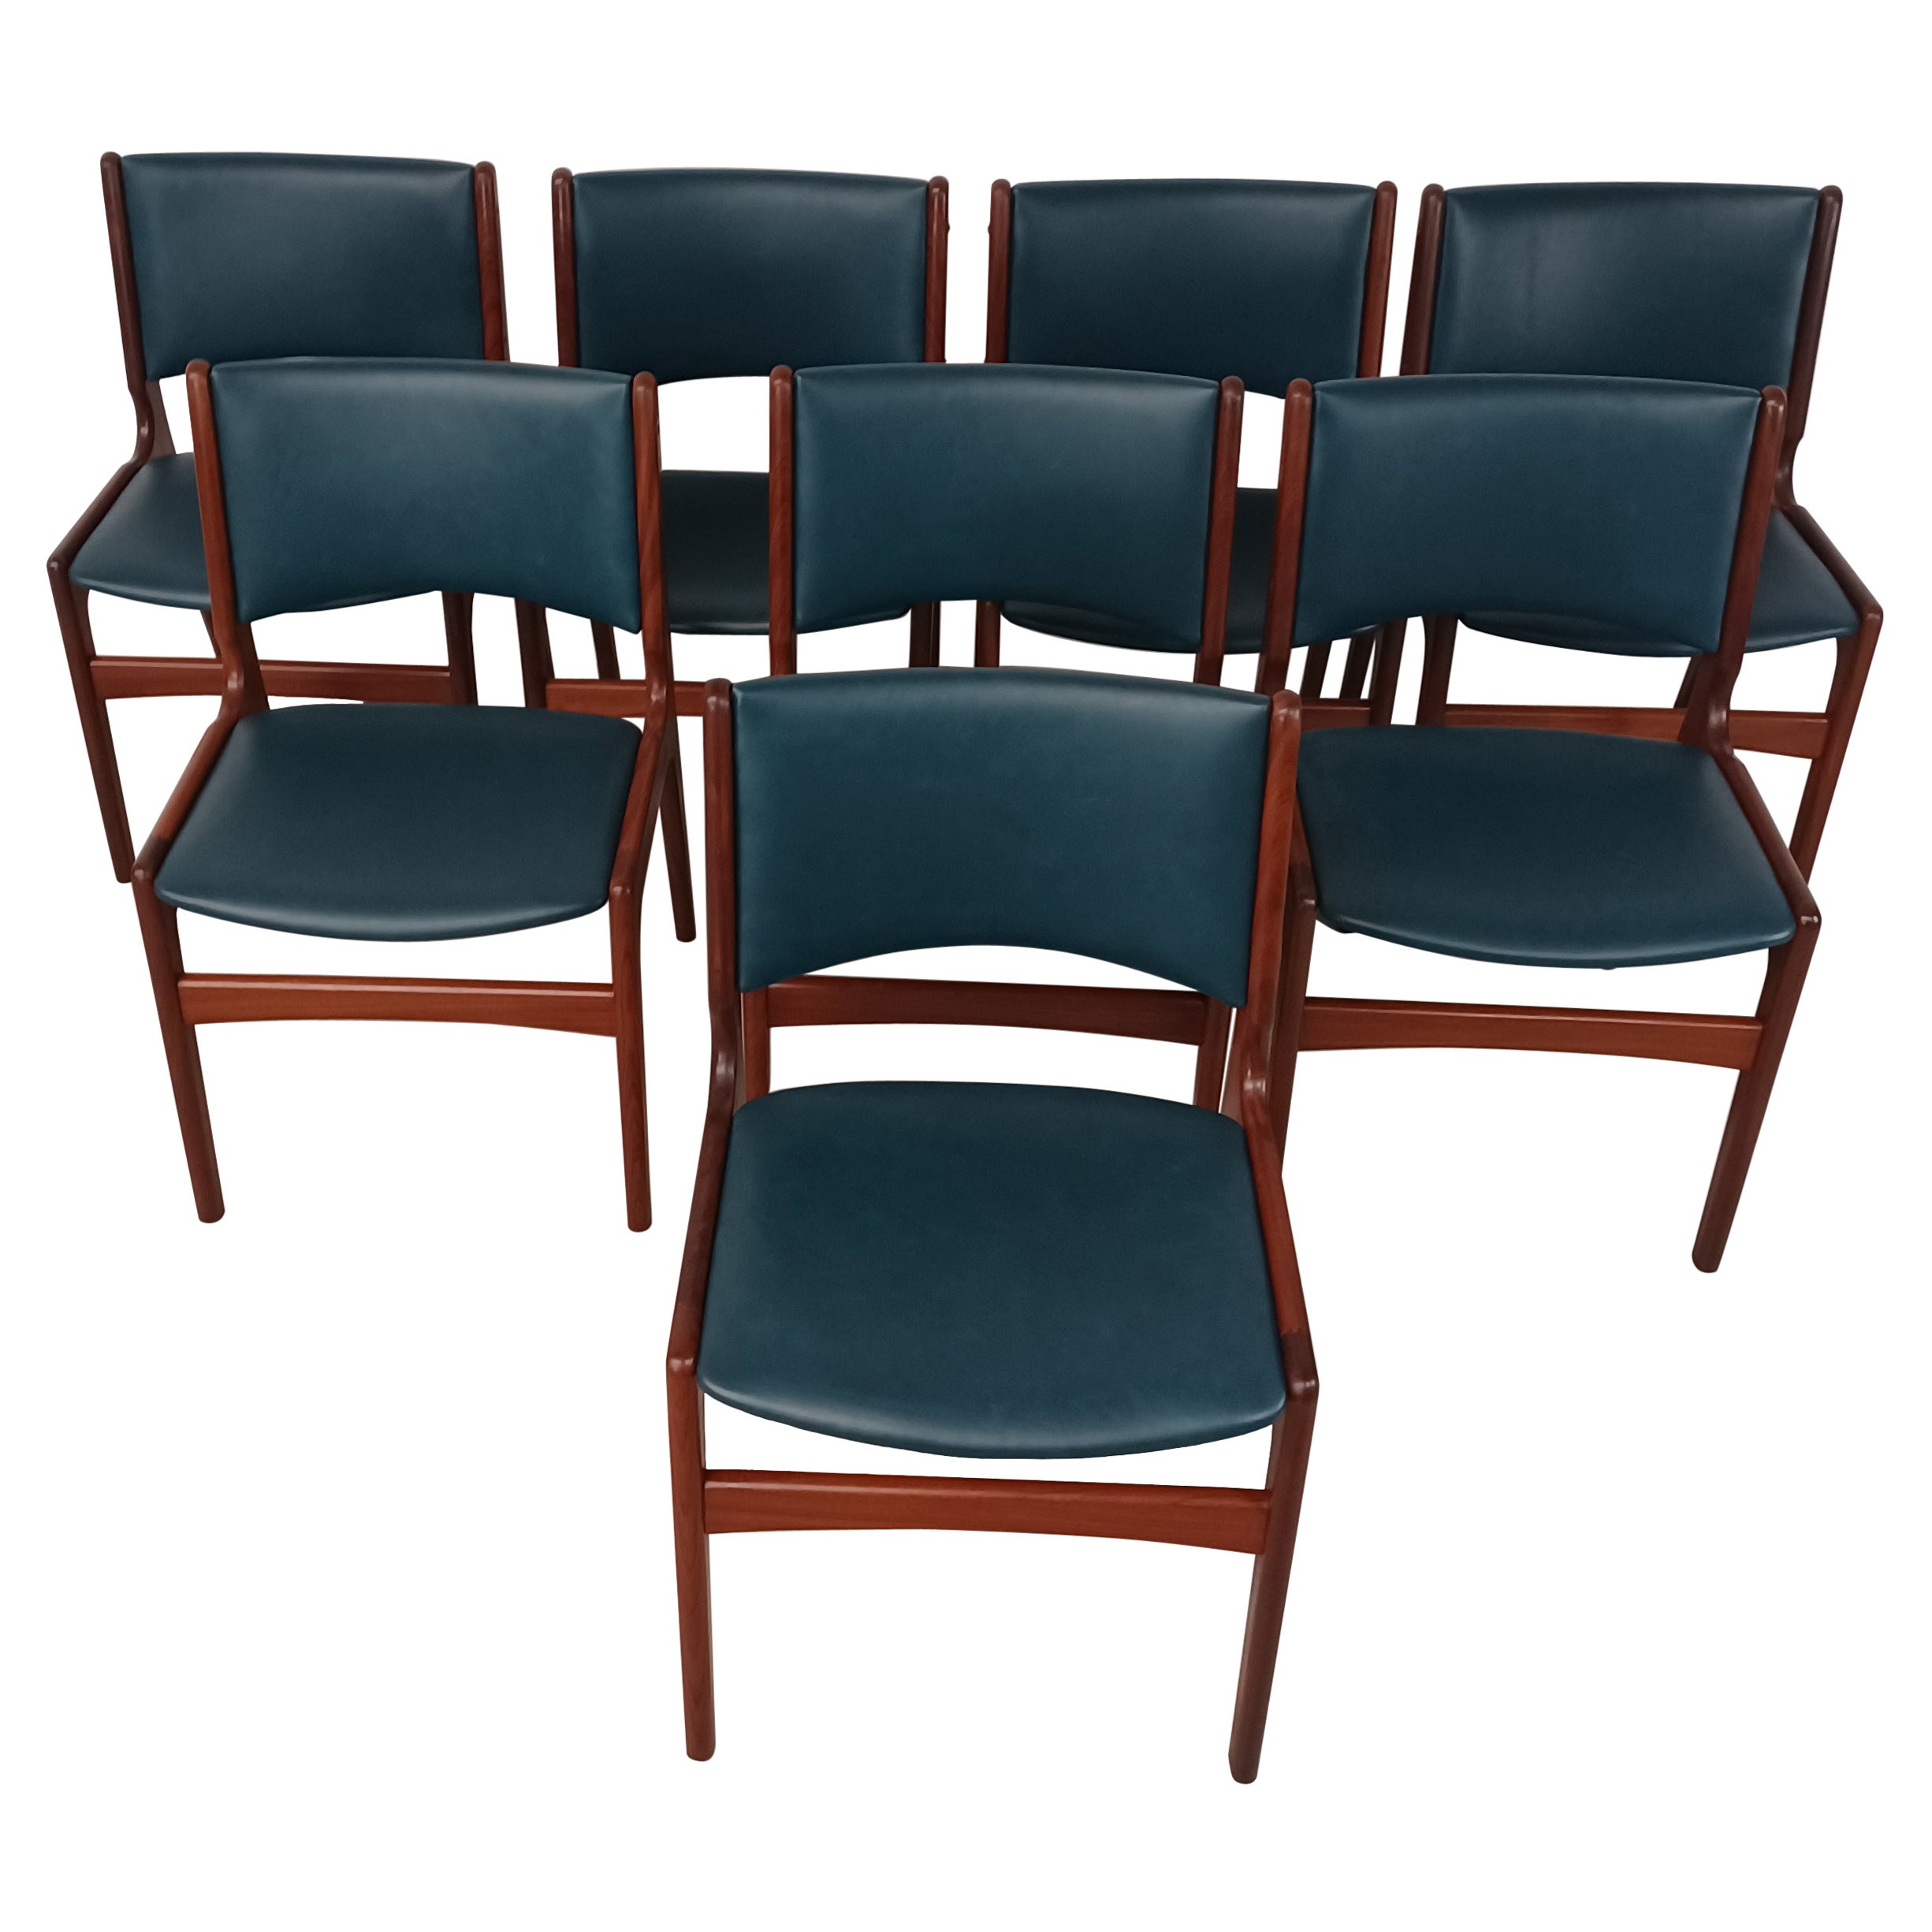 Eight Restored Erik Buch Teak Dining Chairs, Including Custom Reupholstery